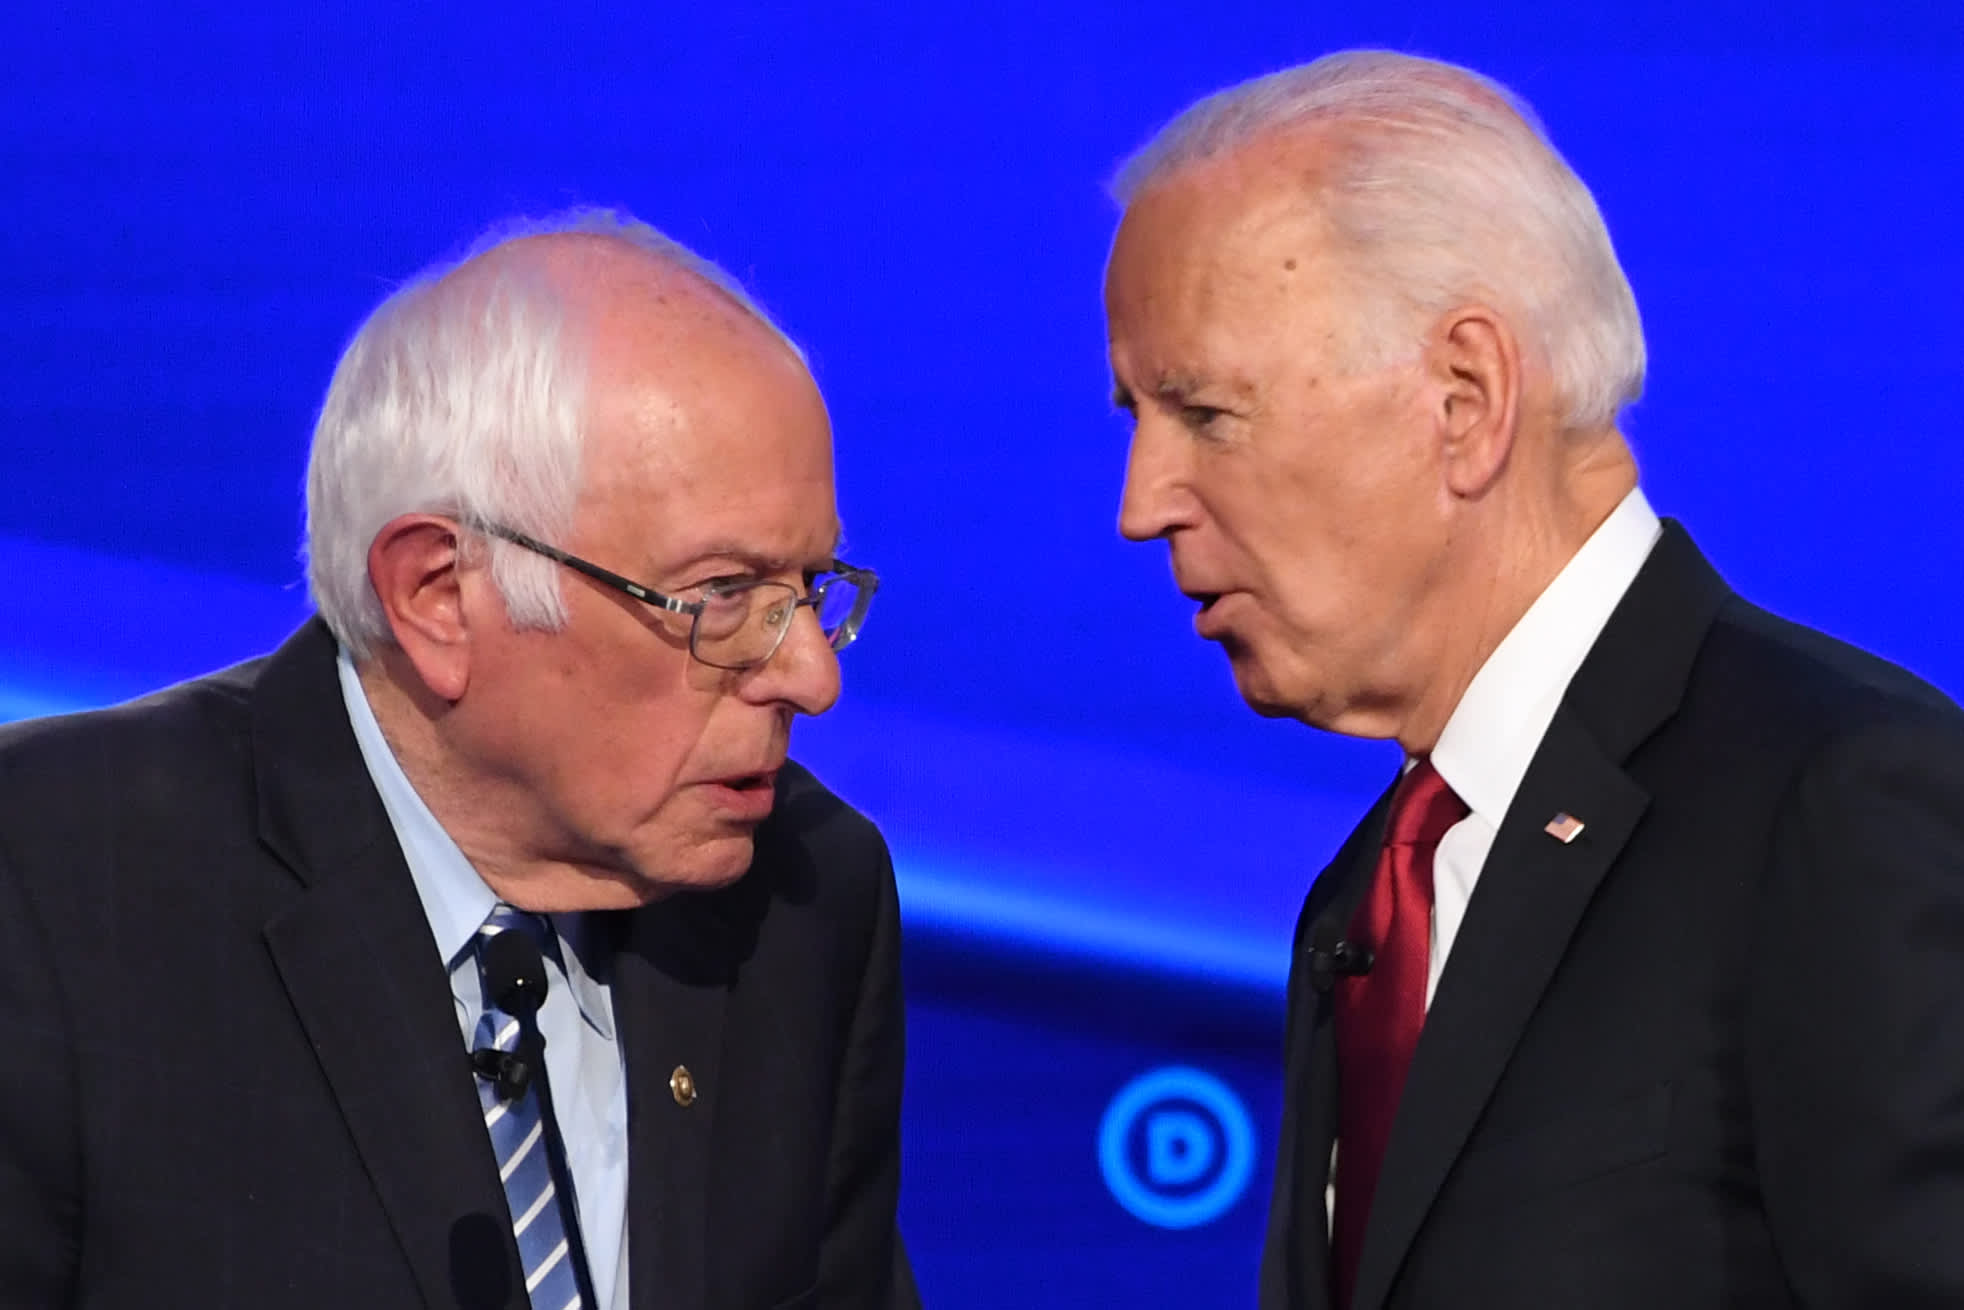 Carolina primary: Joe leads Bernie Sanders NBC-Marist poll